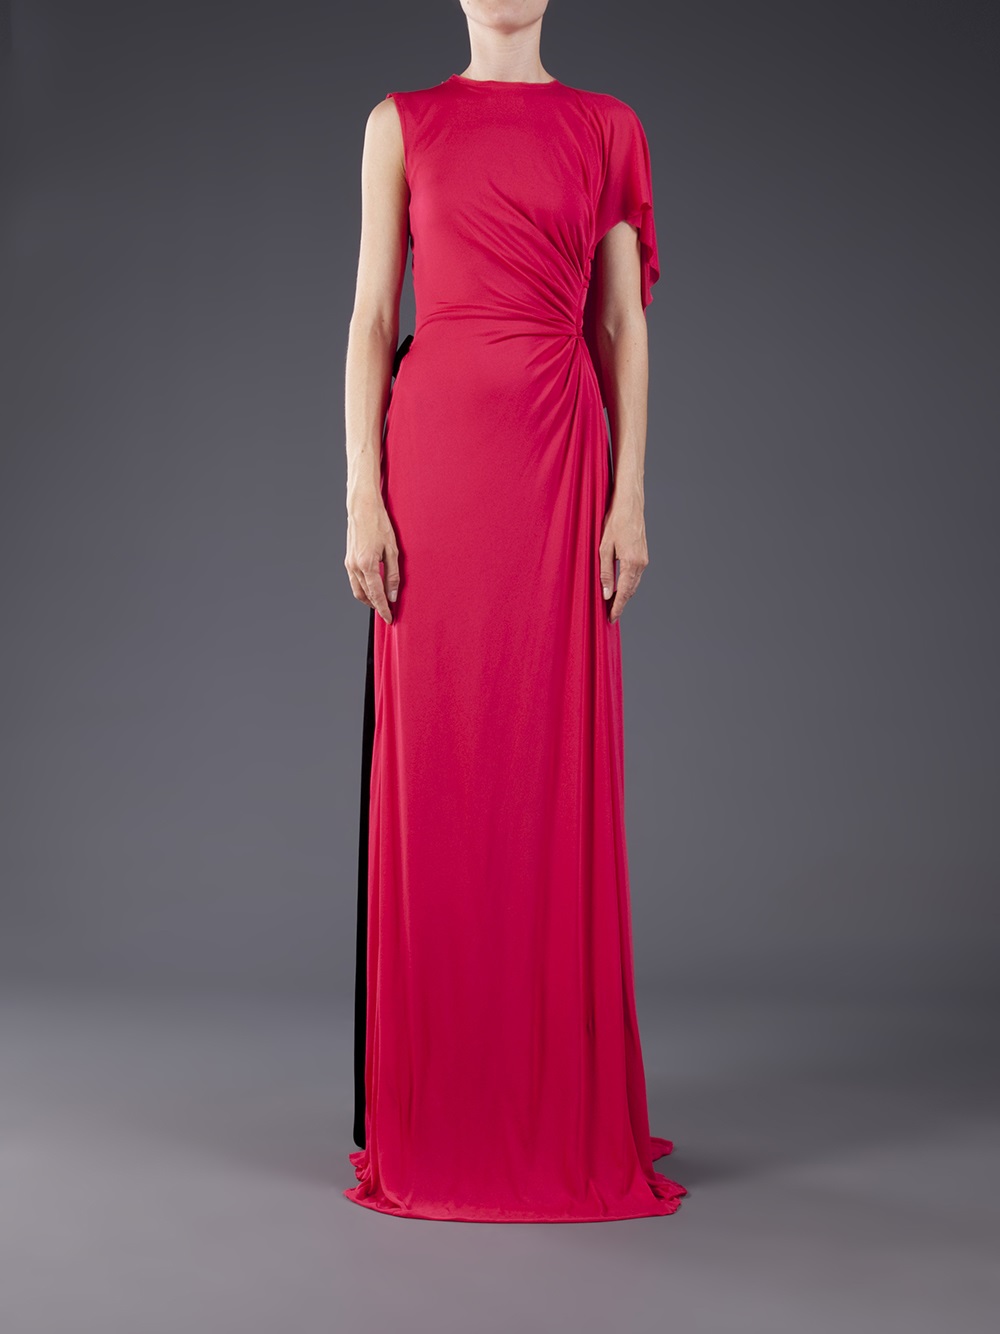 Nina ricci Laceback Gown in Purple | Lyst